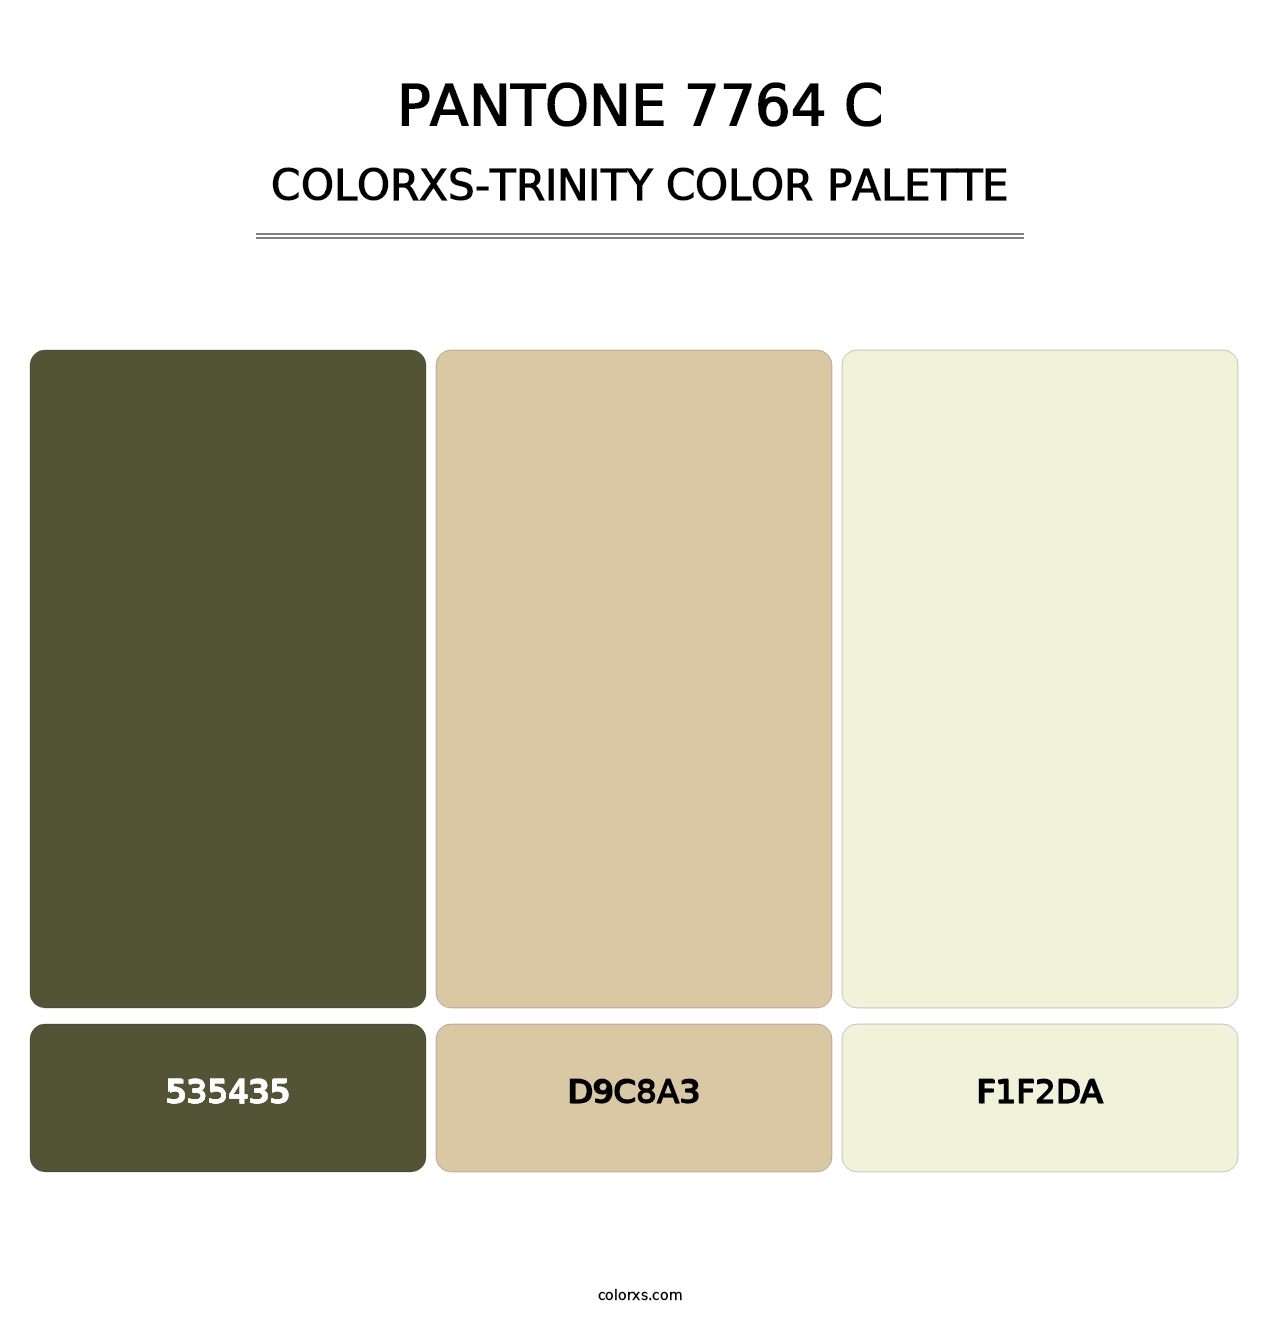 PANTONE 7764 C - Colorxs Trinity Palette